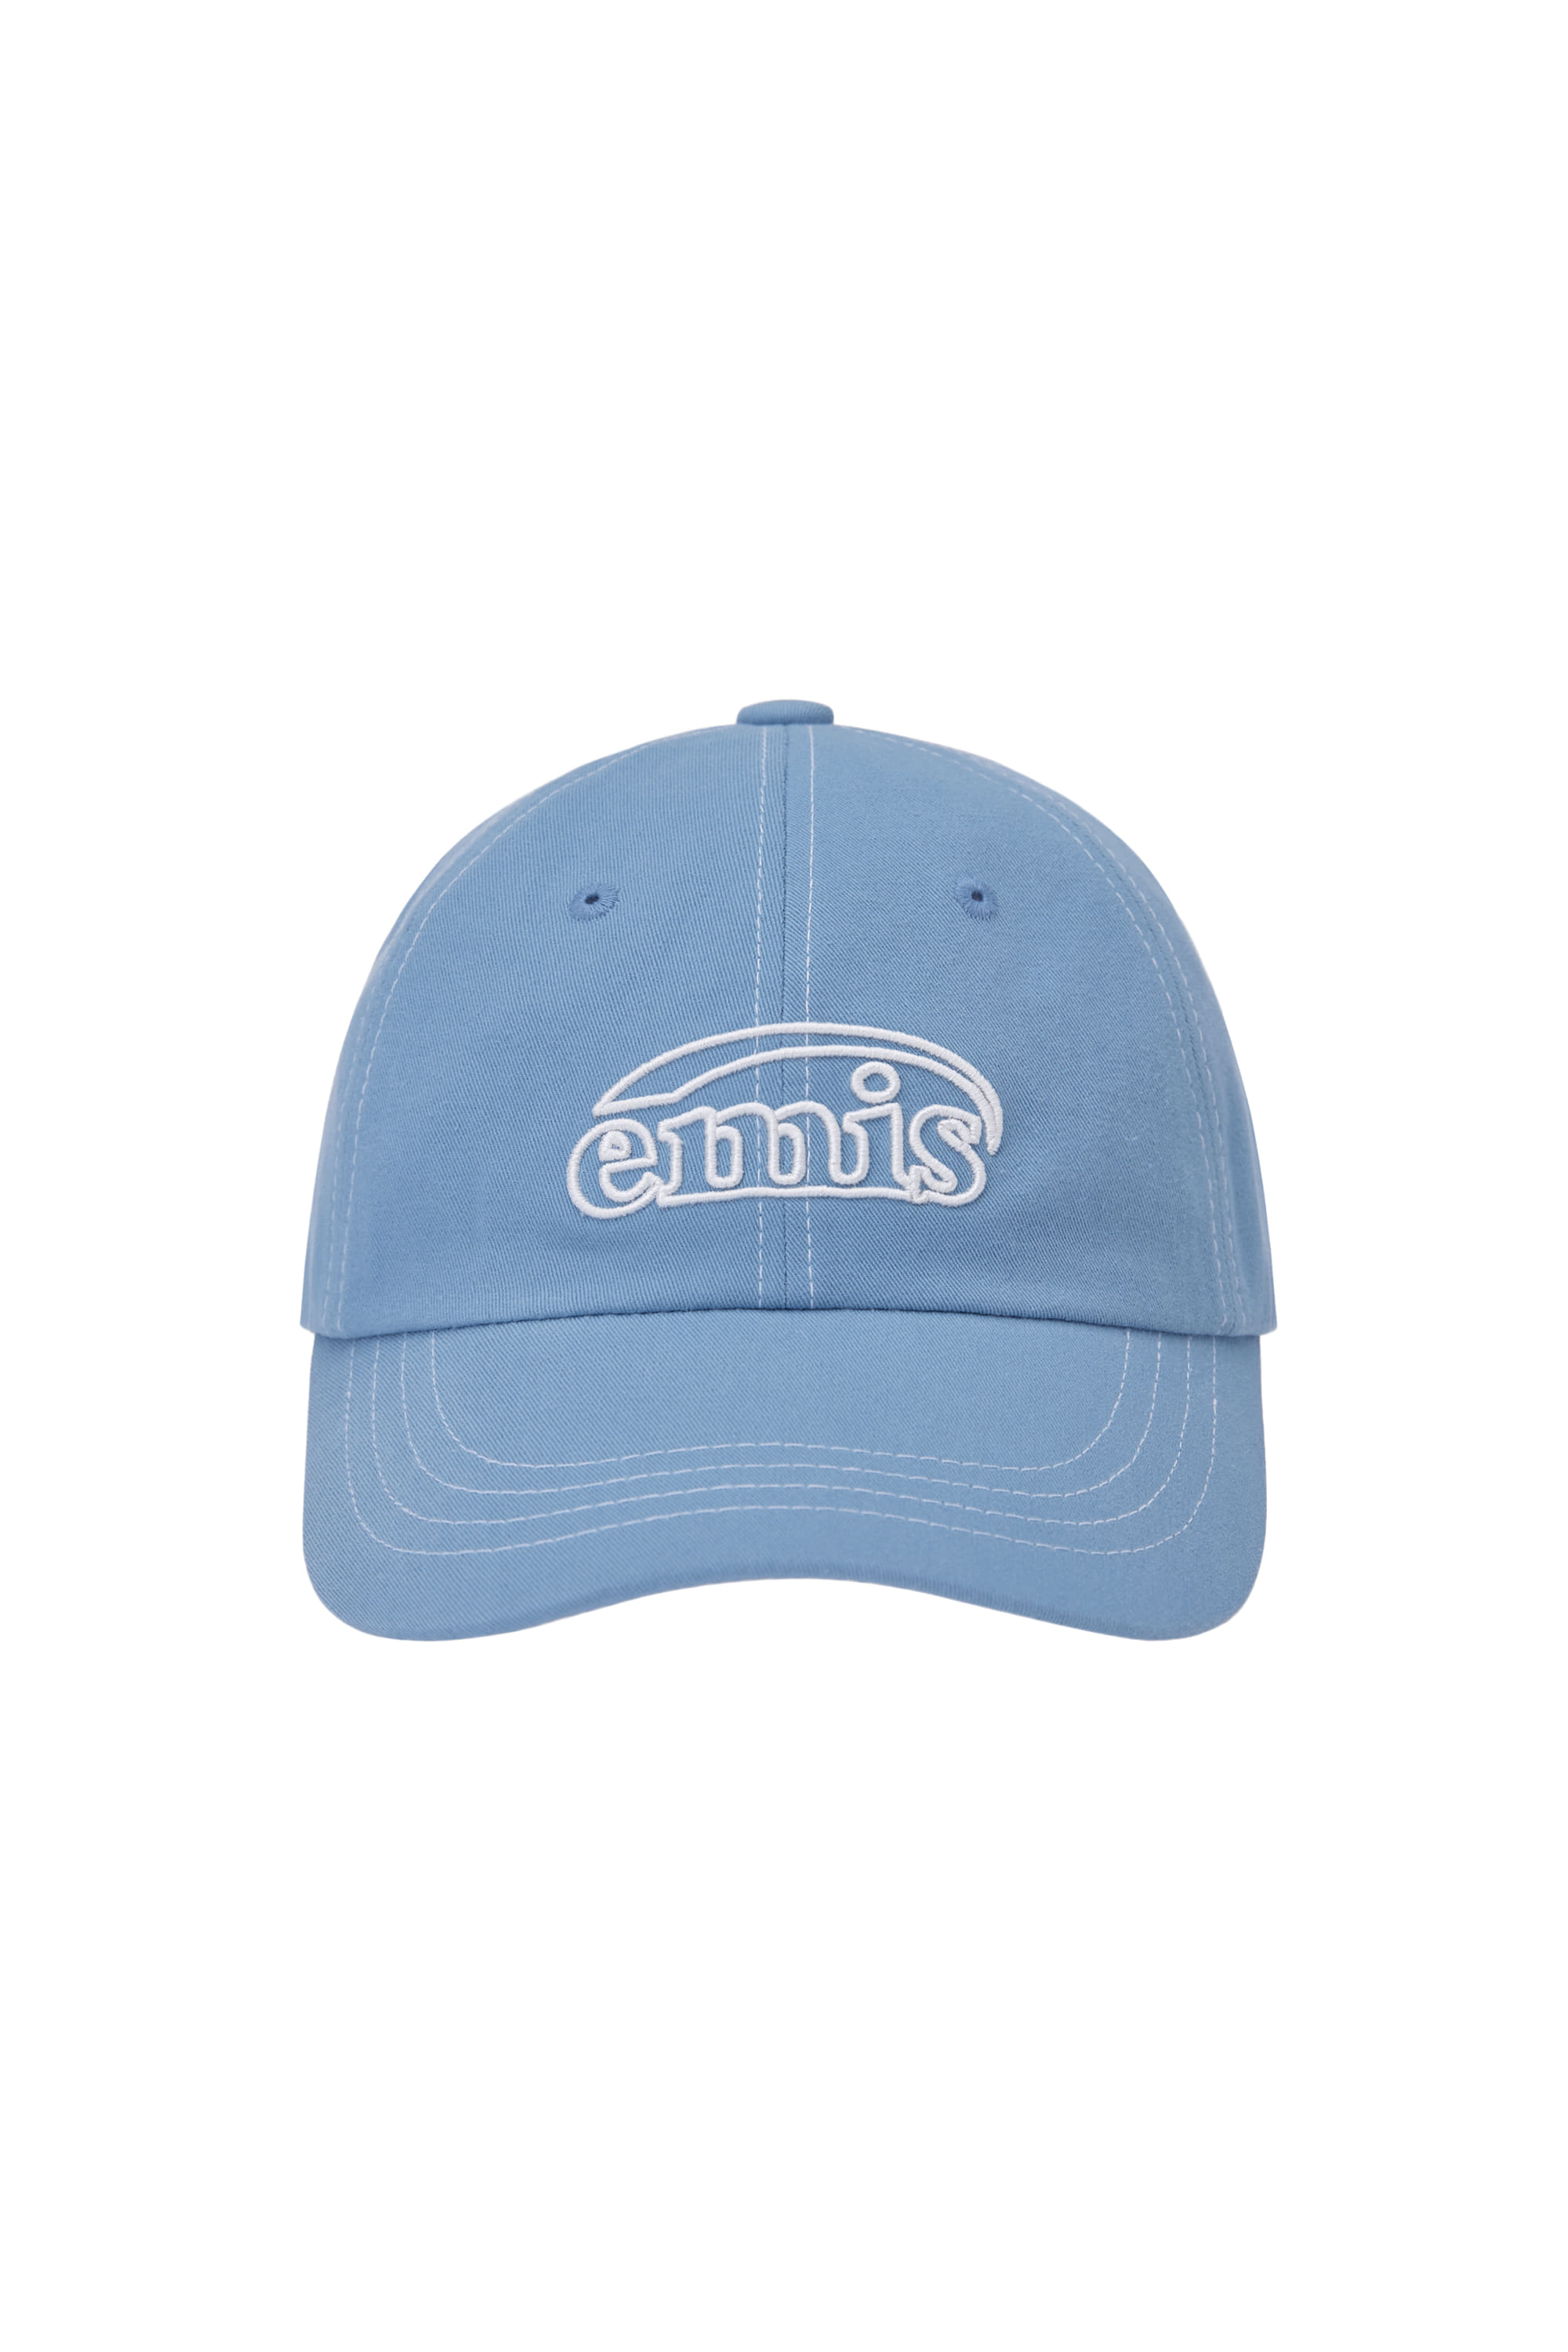 WHITE STITCH BALL CAP-SKY BLUE